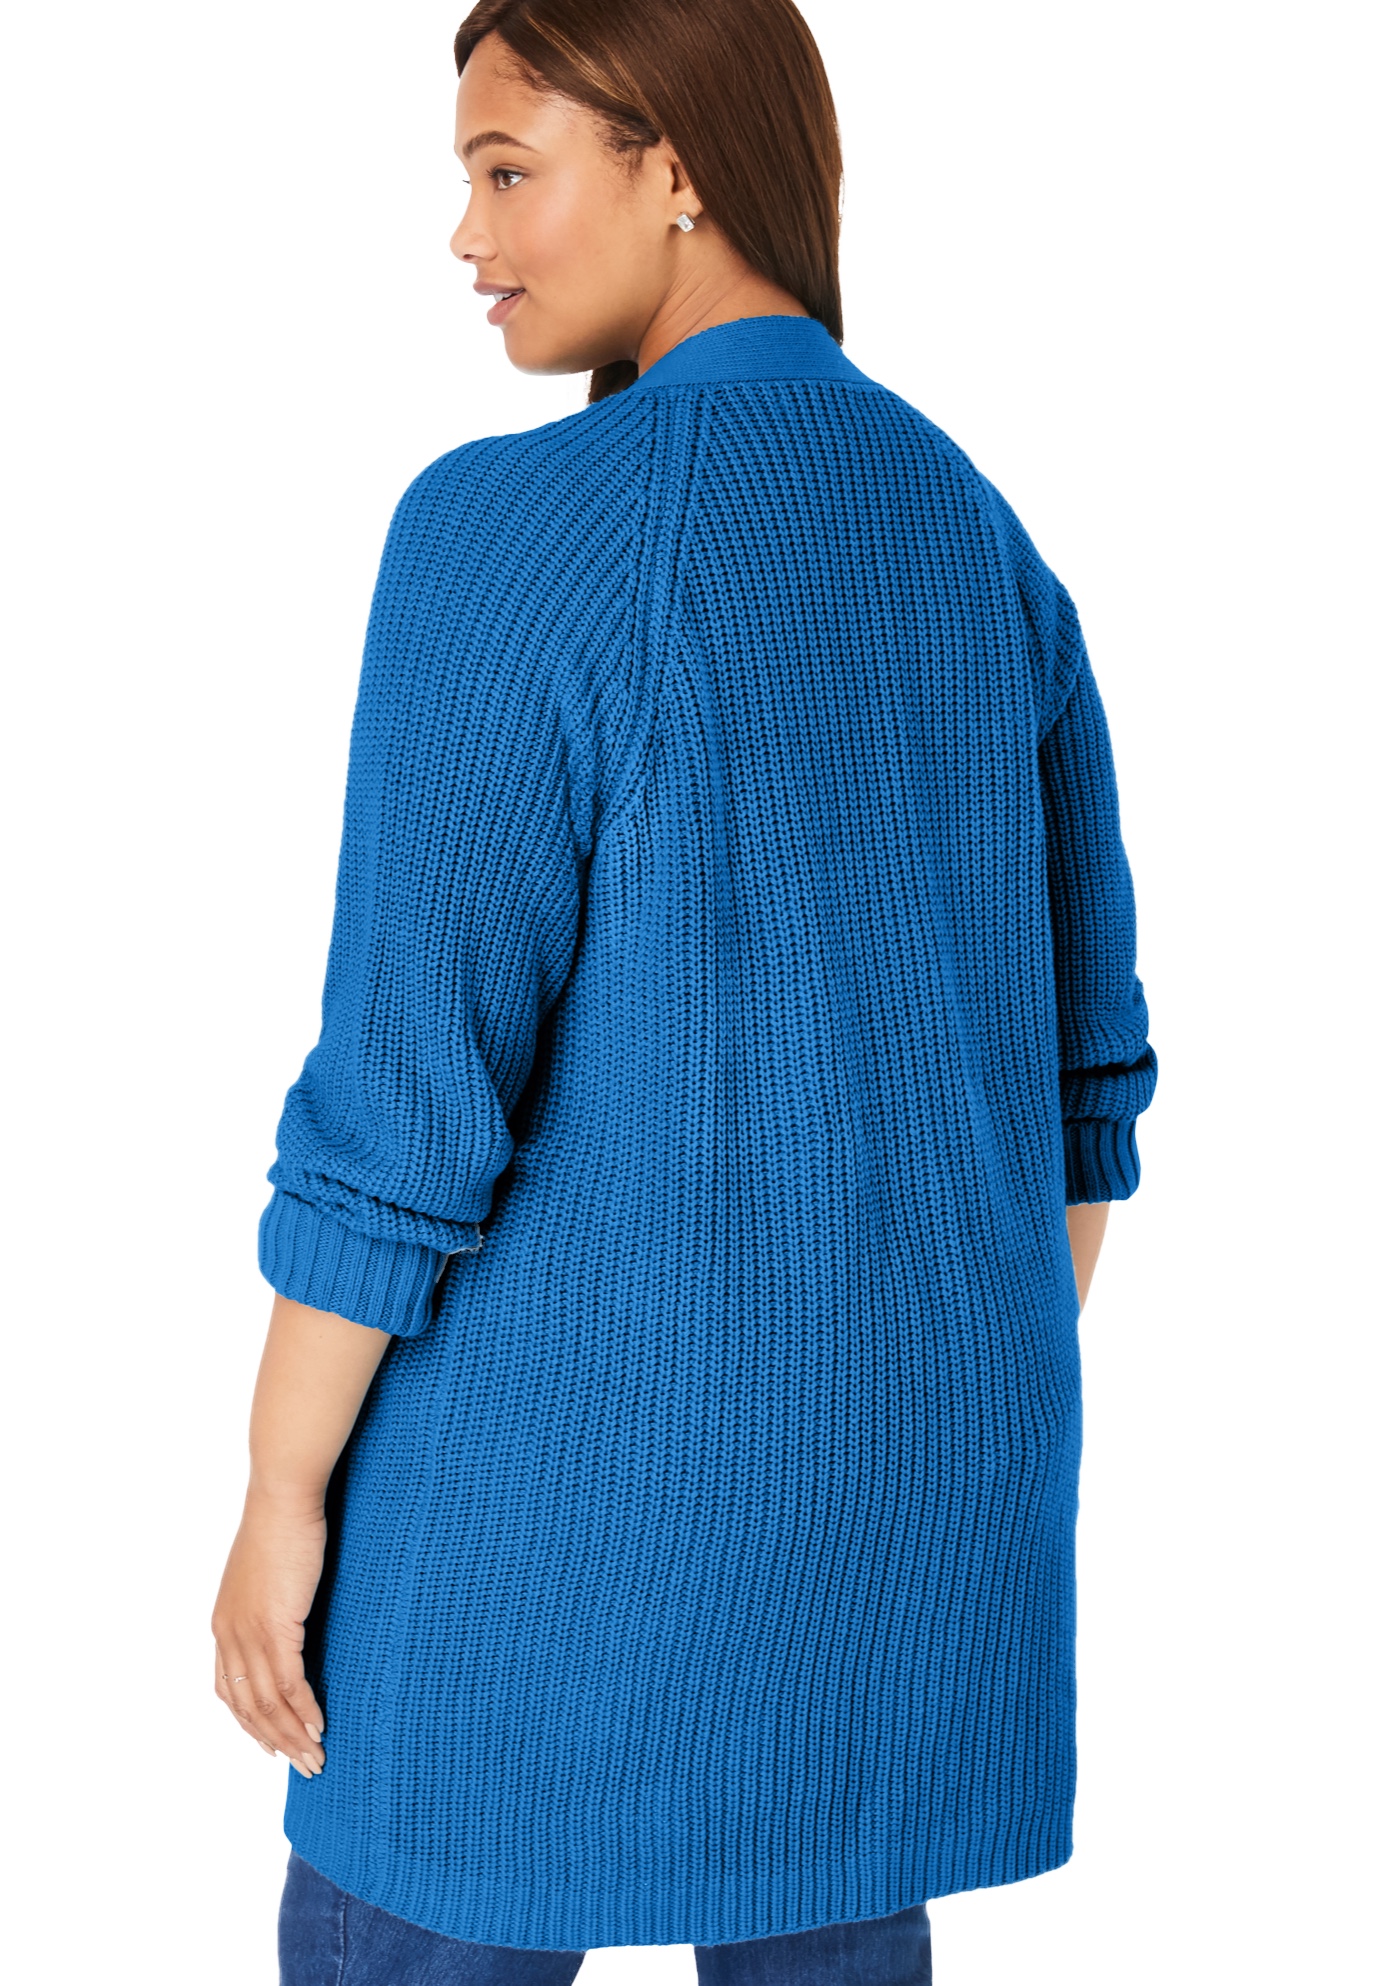 Woman Within Women S Plus Size Long Sleeve Shaker Cardigan Sweater Sweater